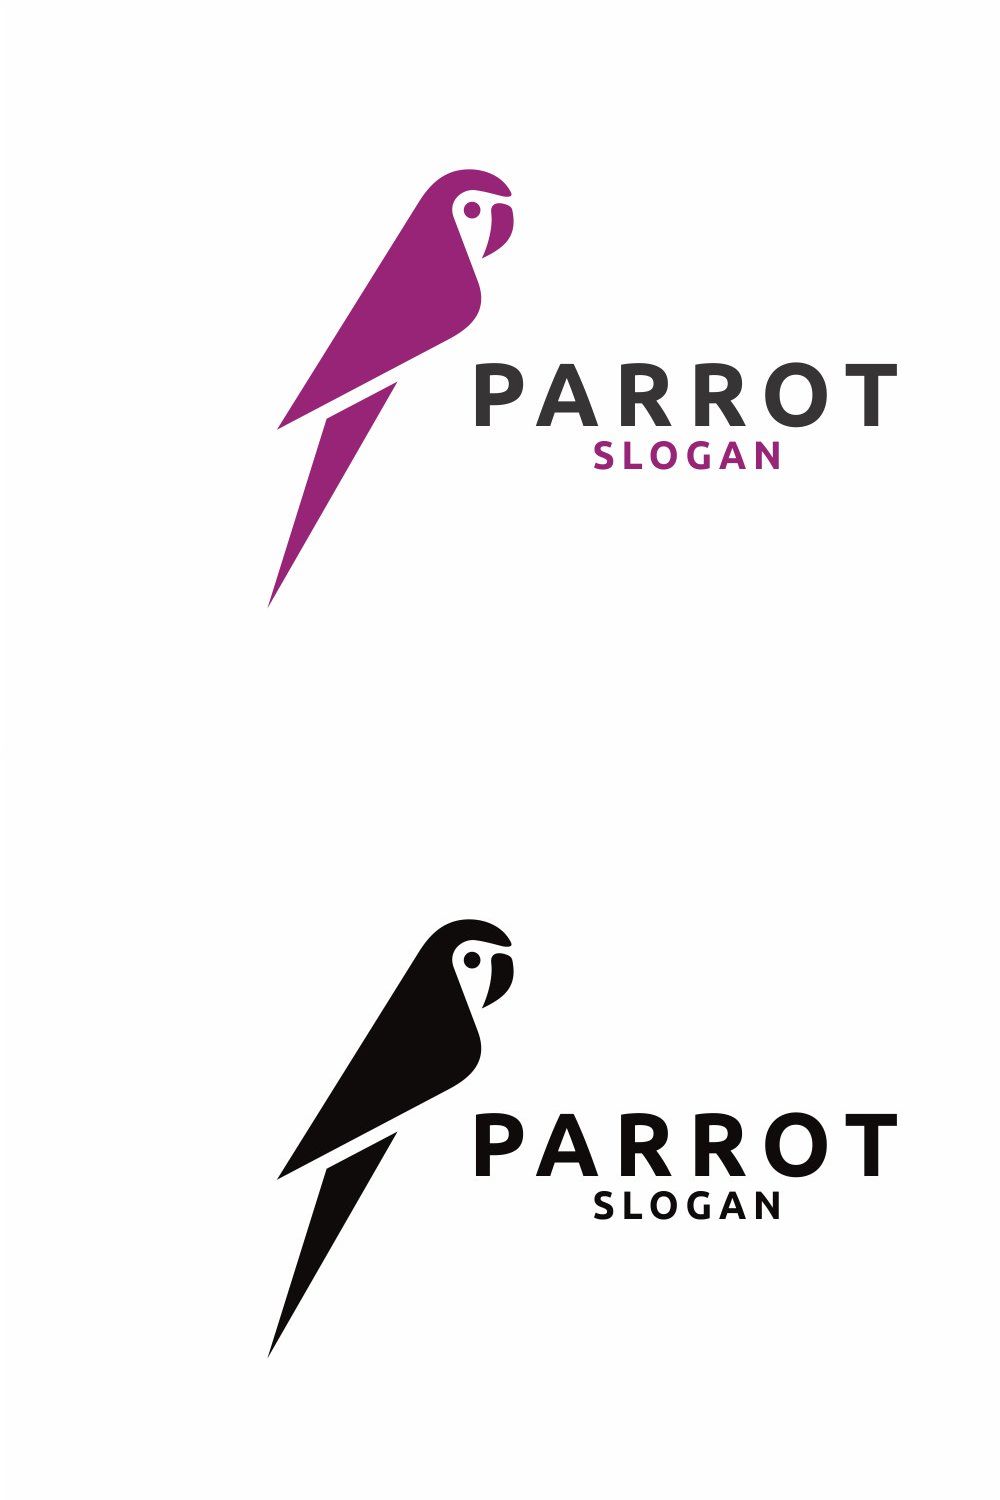 Parrot pinterest preview image.